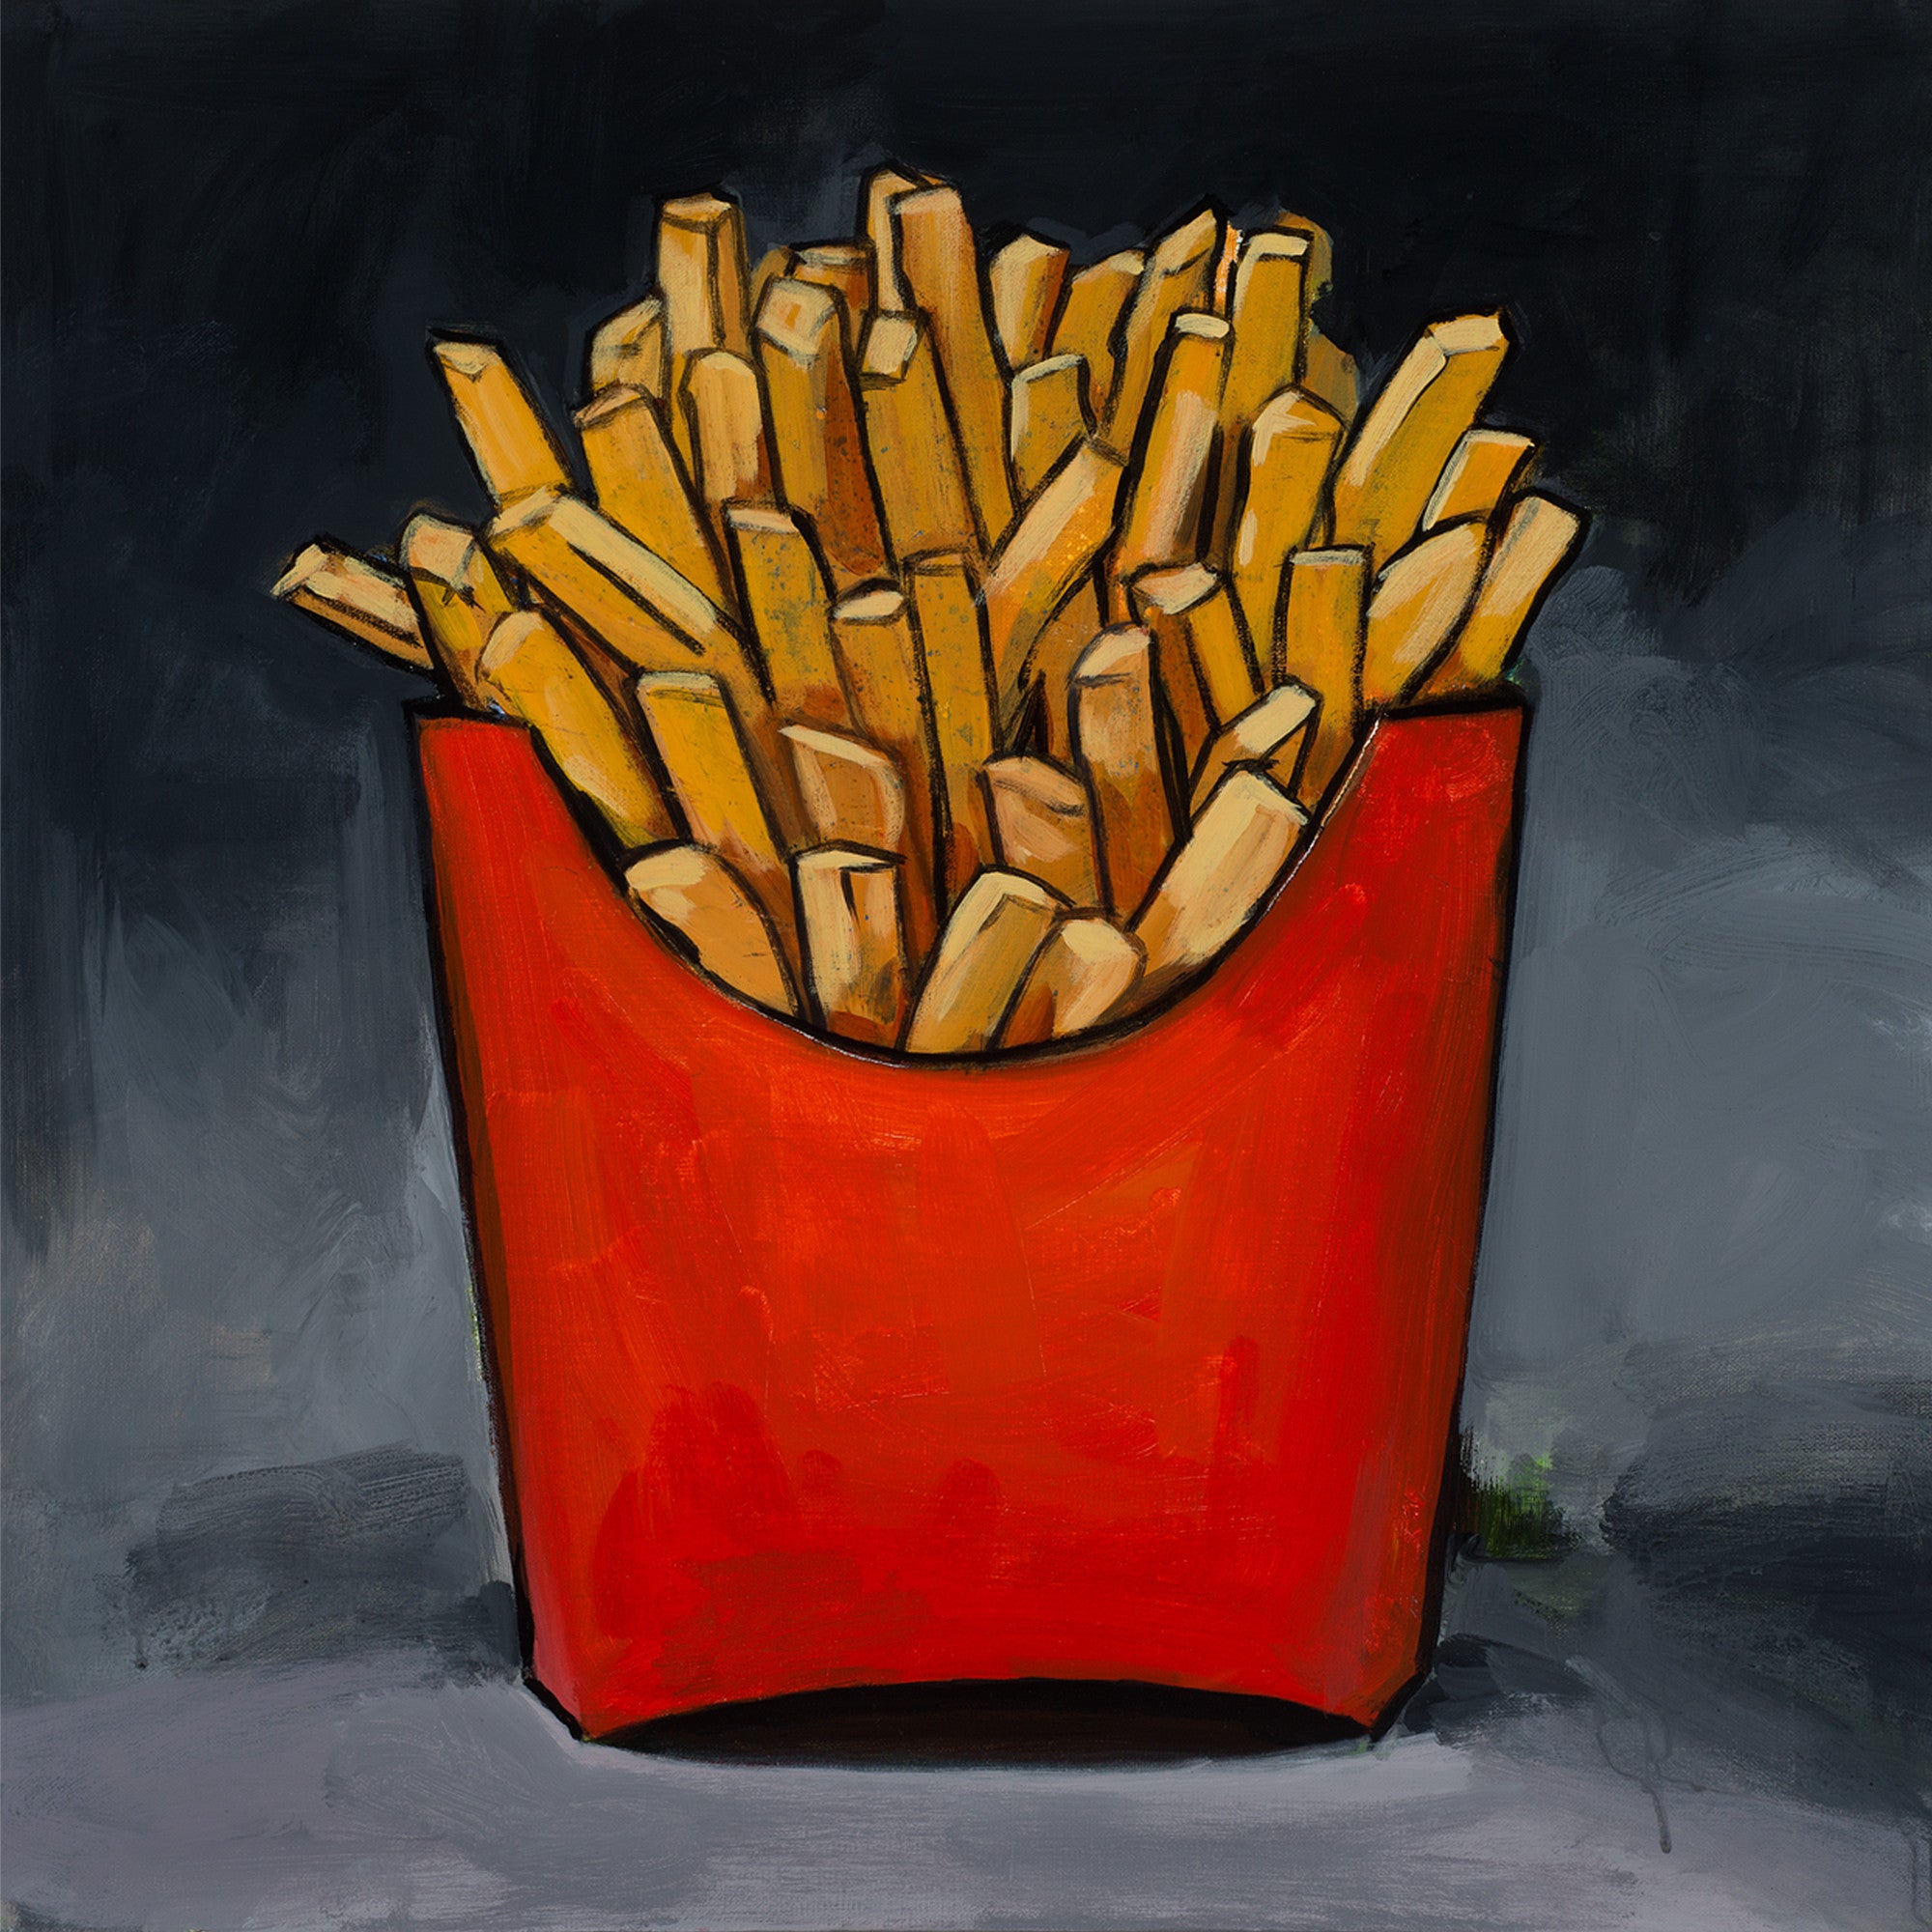 French Fries (Savarin)